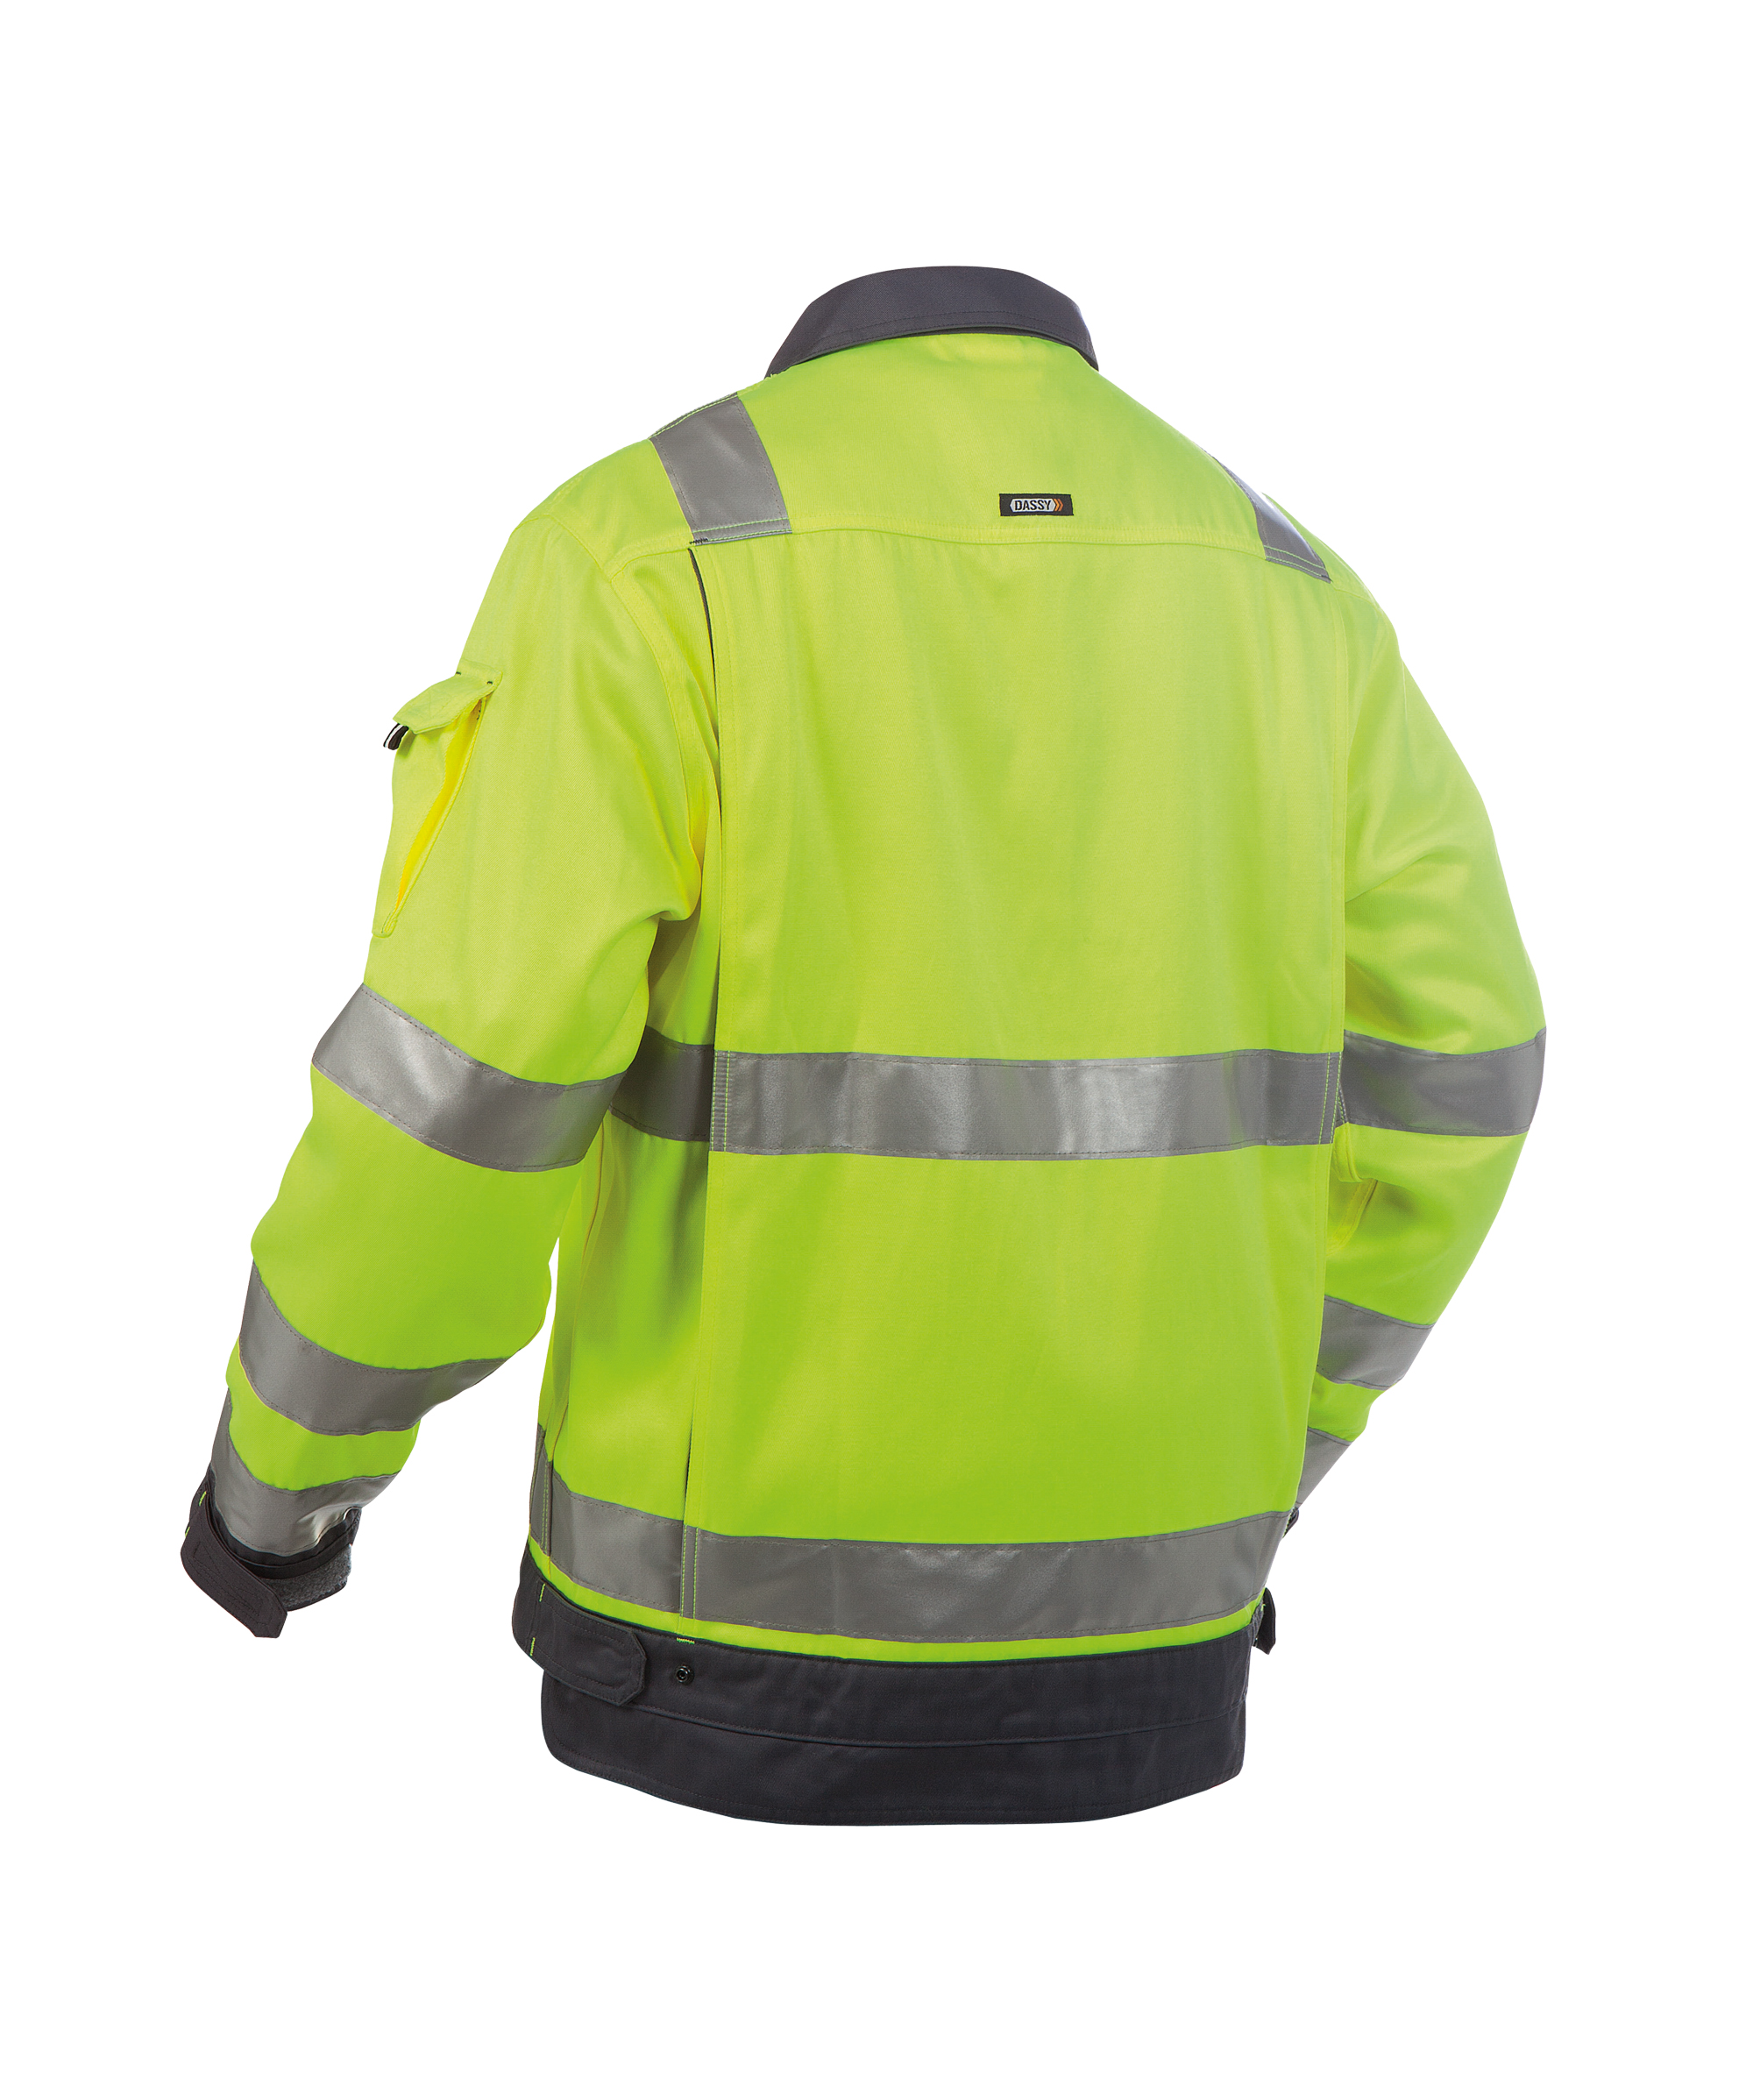 dusseldorf_high-visibility-work-jacket_fluo-yellow-cement-grey_back.jpg